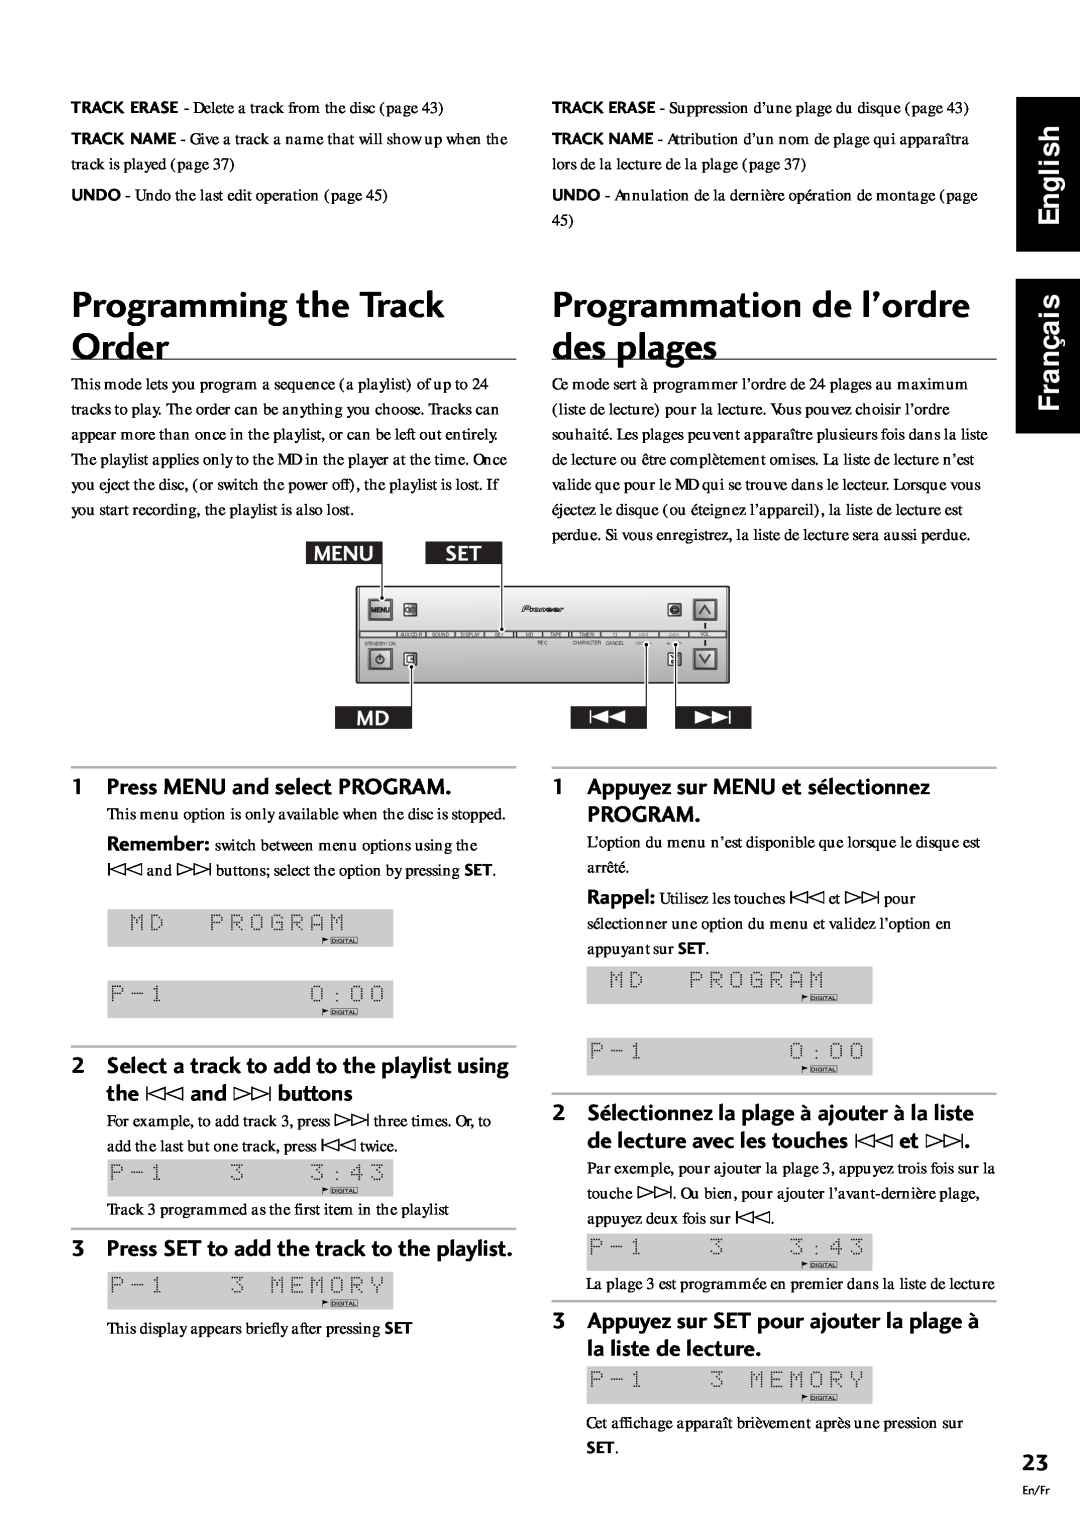 Pioneer MJ-L77 Programming the Track Order, Programmation de lÕordre des plages, Français, 1Press MENU and select PROGRAM 